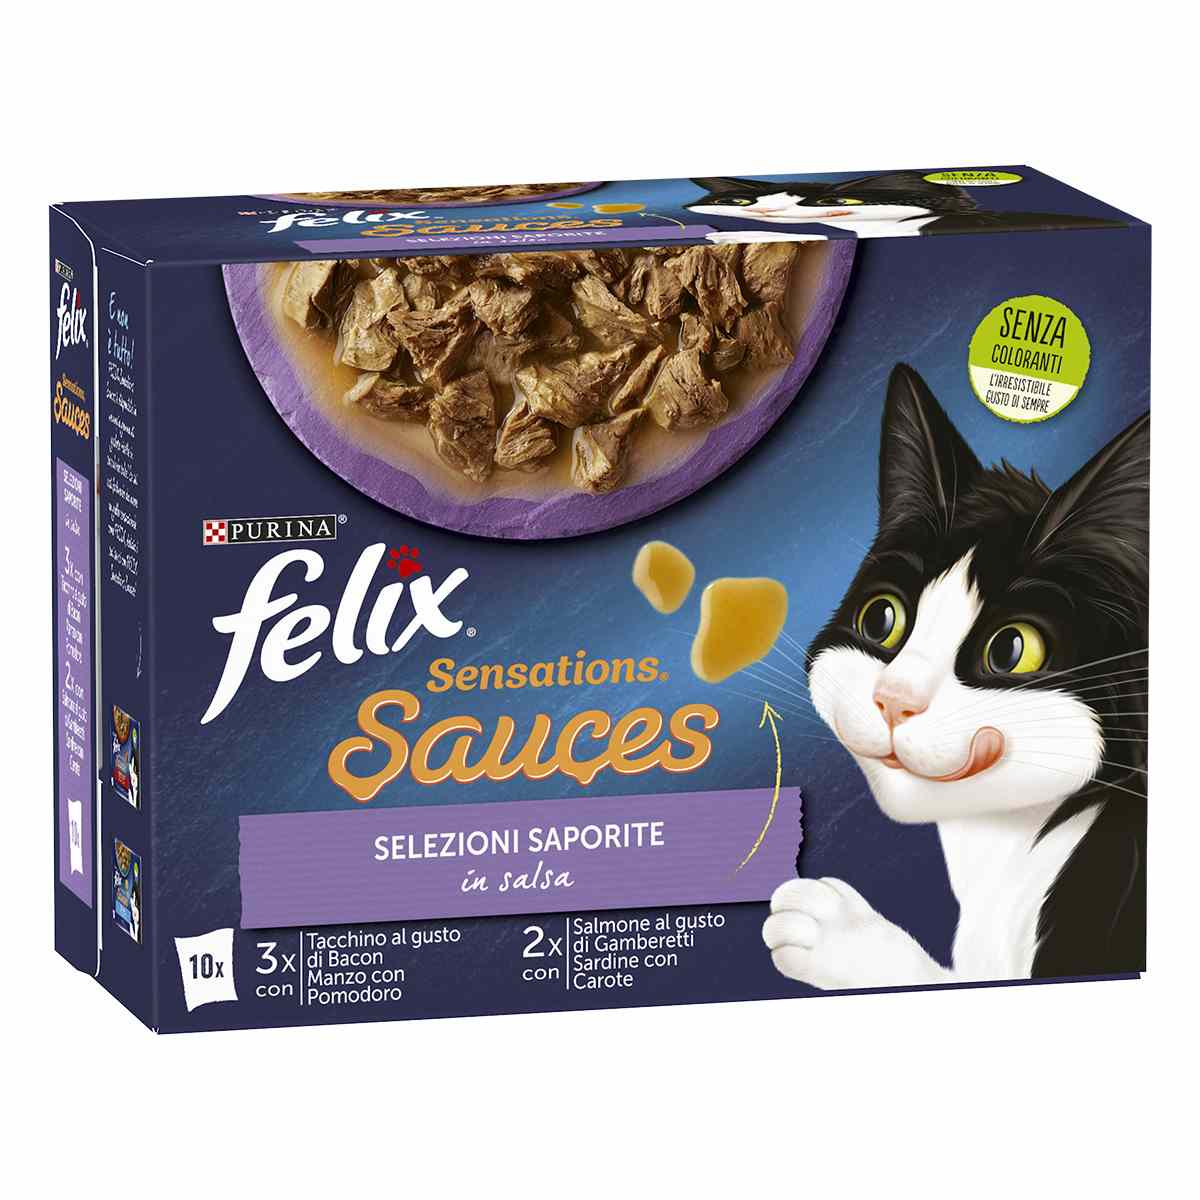 Felix Sensation Sauces Selezioni Saporite